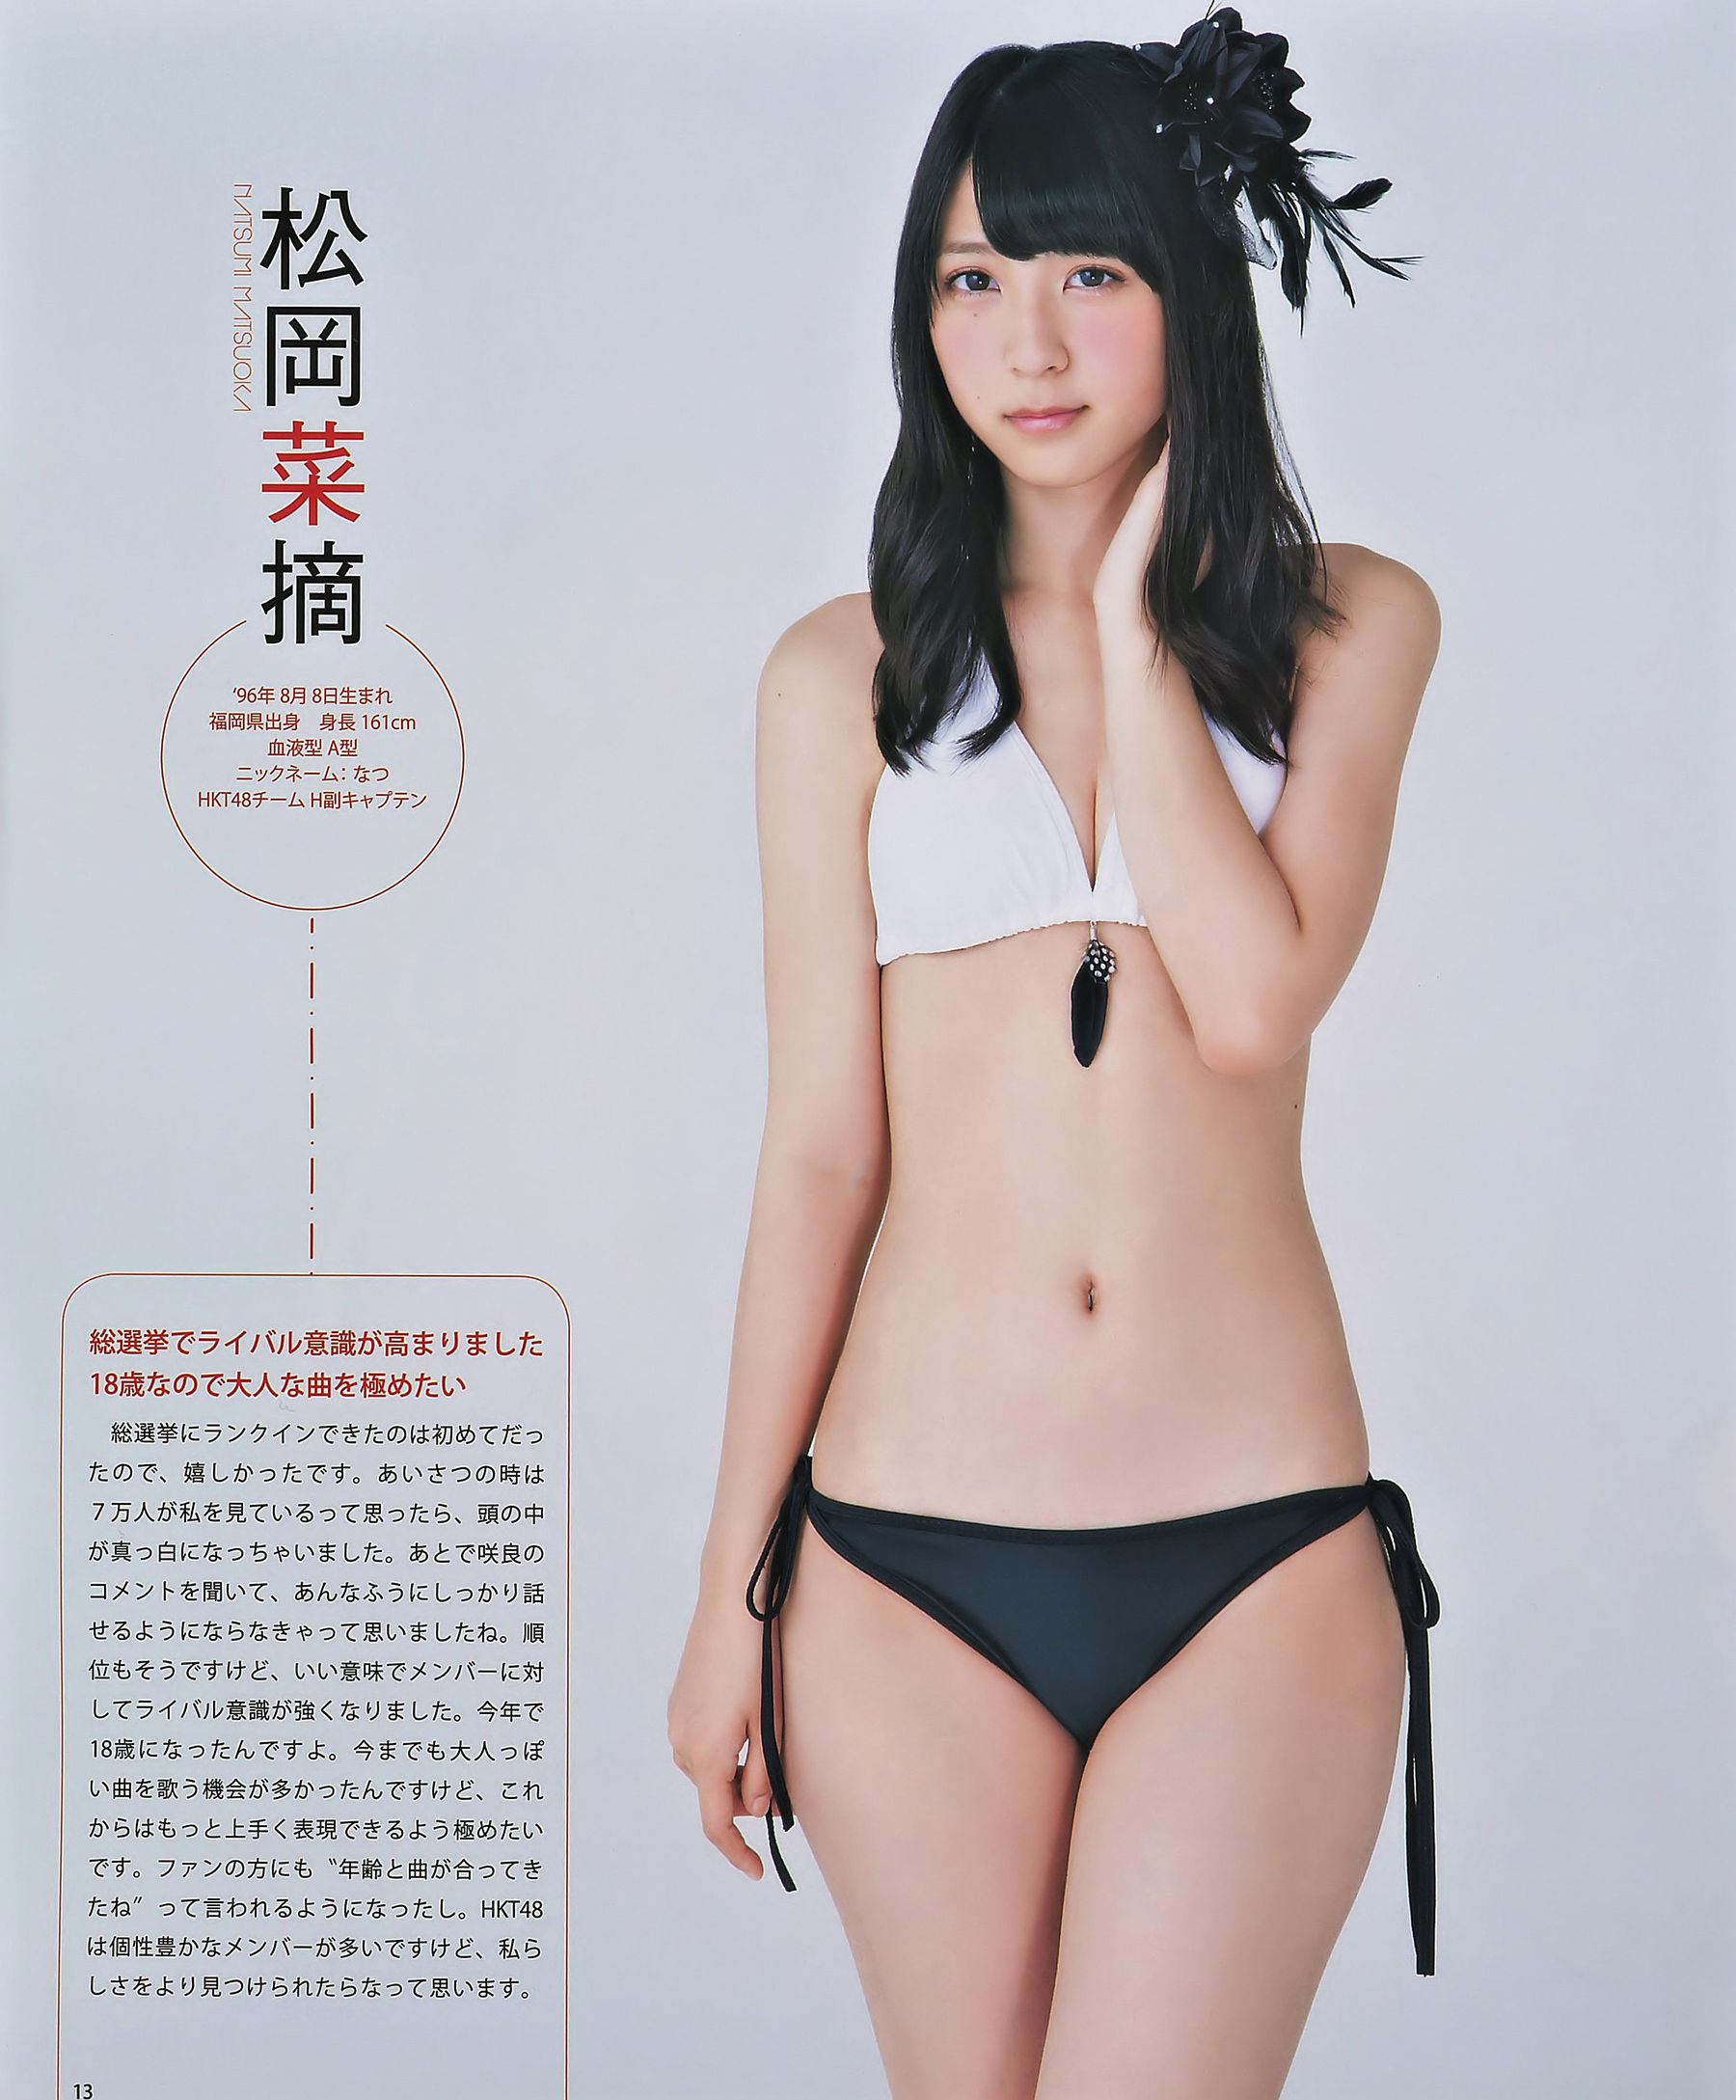 [Bomb Magazine] 2014年No.10 宮脇咲良 兒玉遥 森保まどか 松岡菜摘 写真杂志